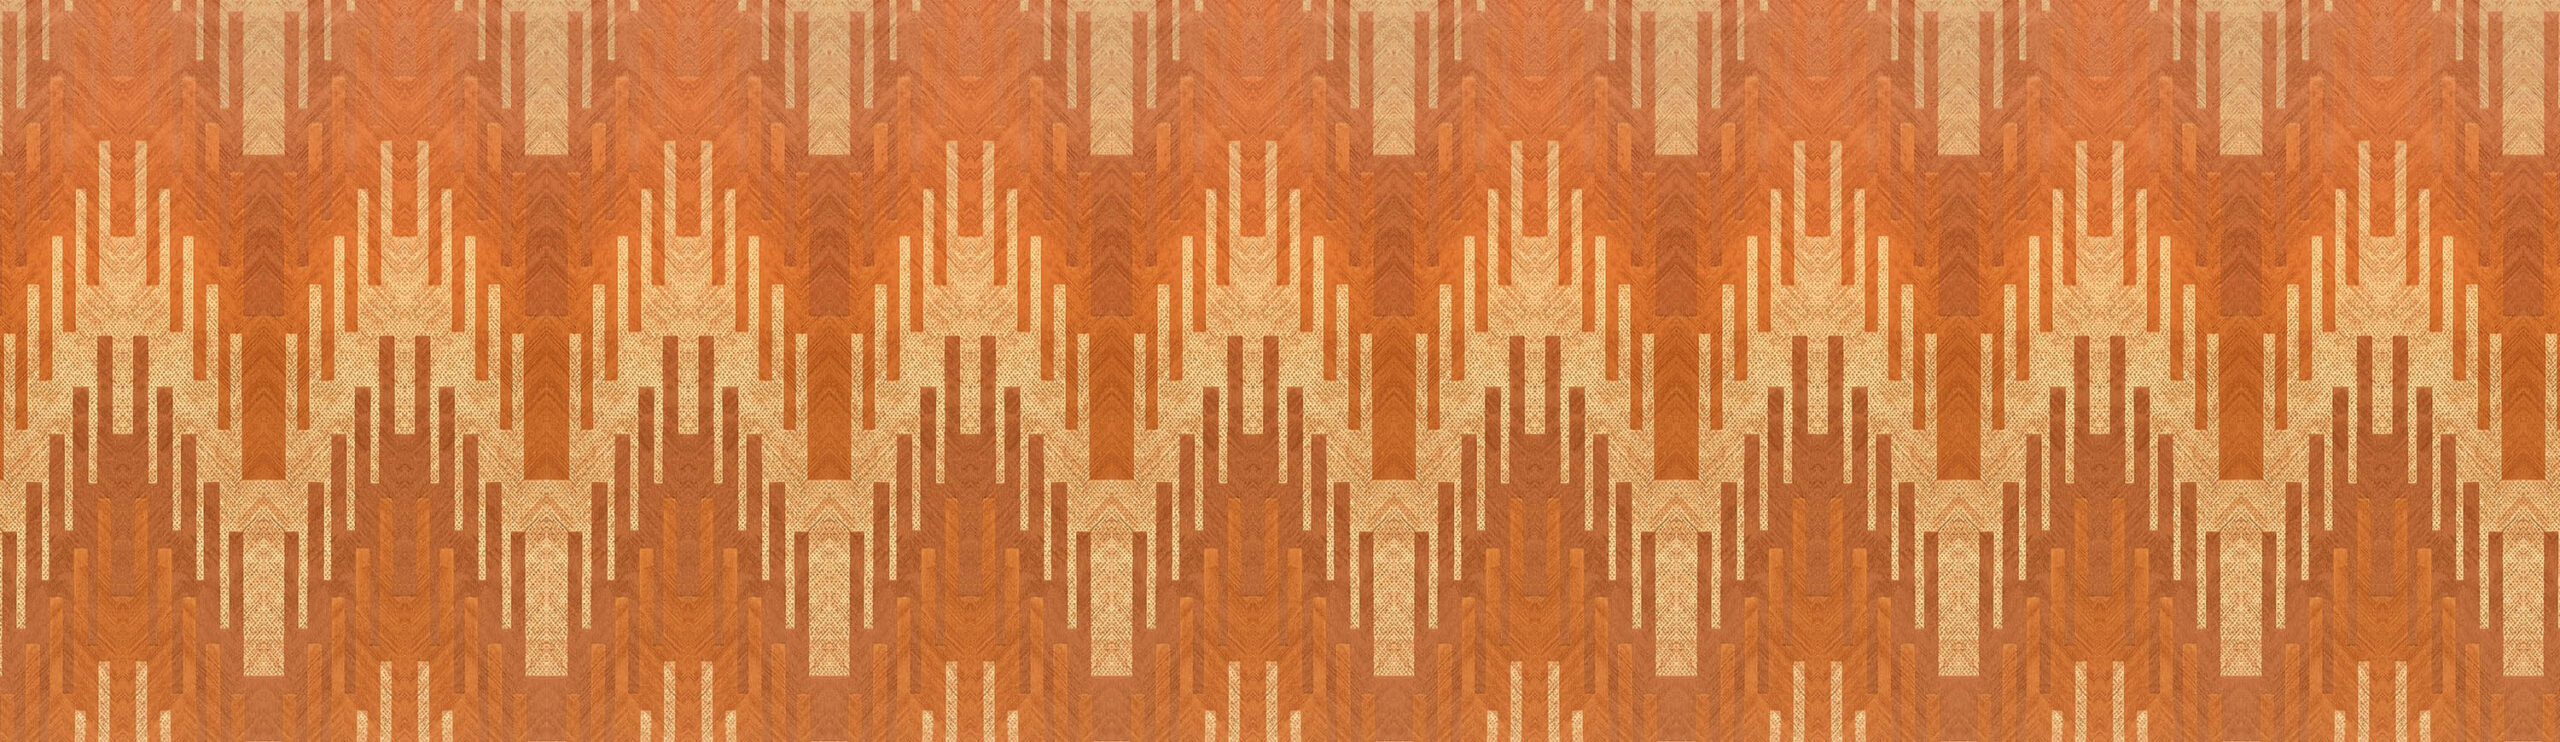 Decorative Tile Geometric Pattern Wall Border Sticker